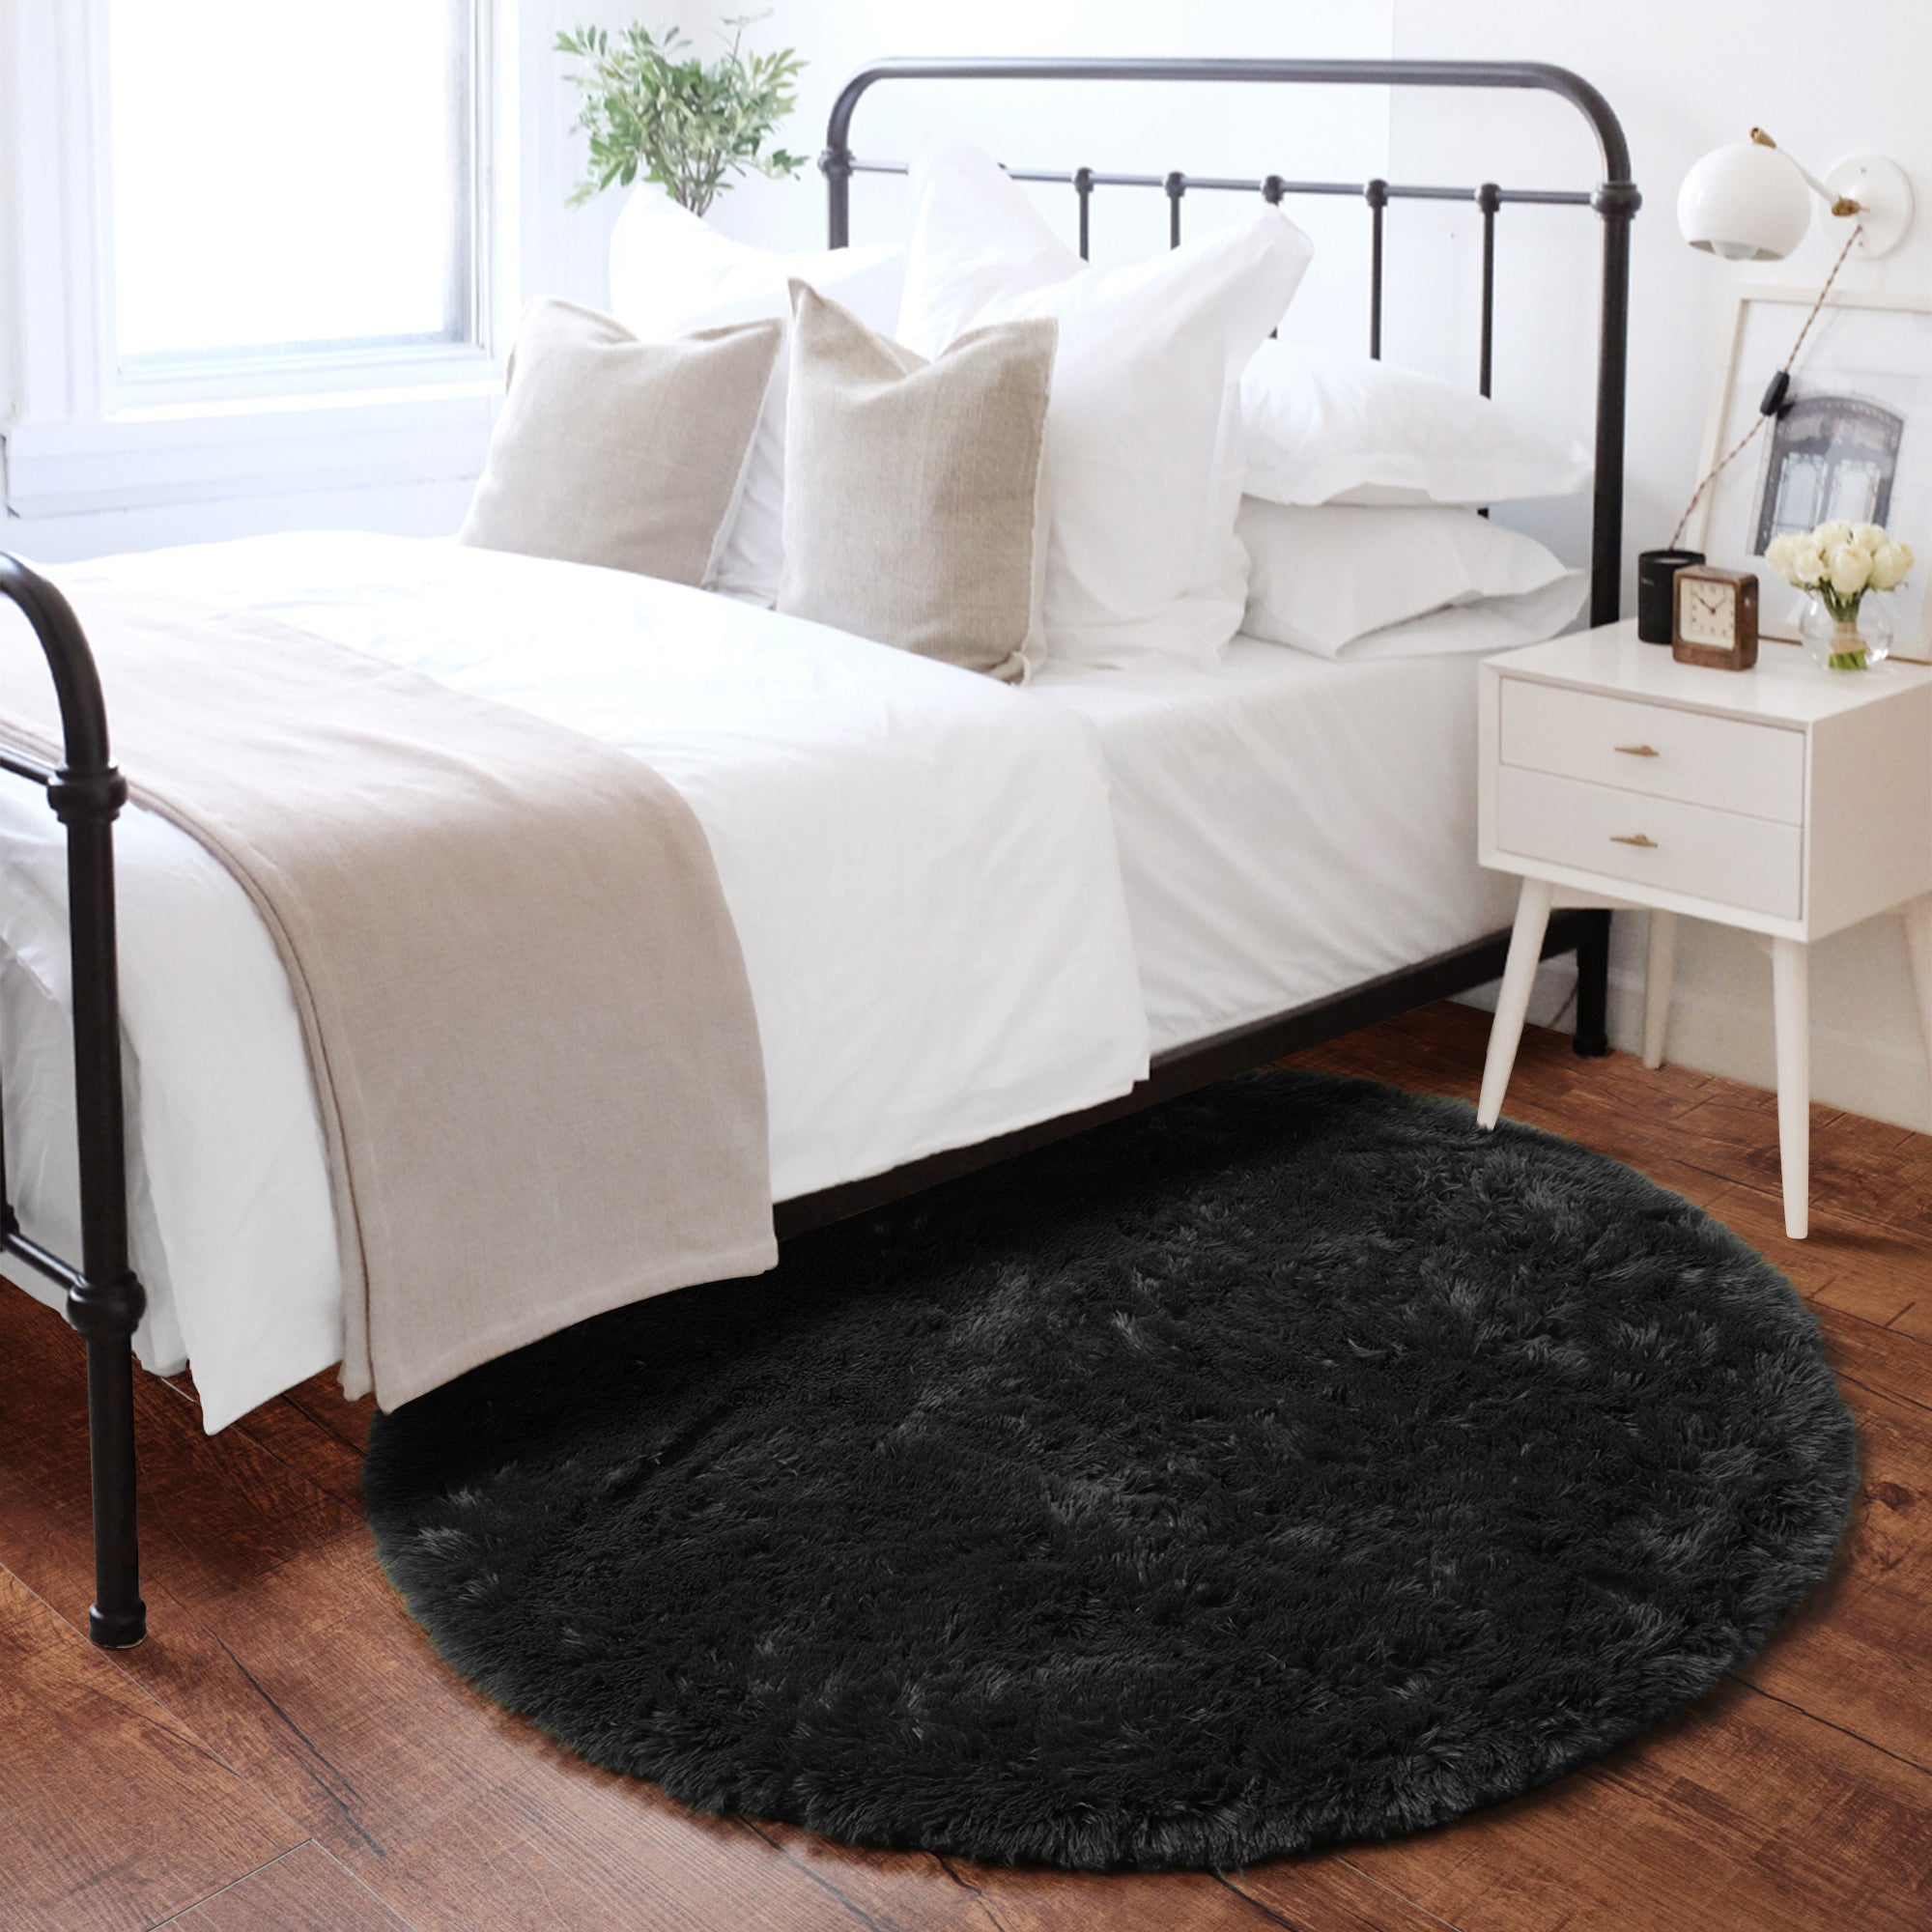 Soft Bedroom Black Round Area Rug